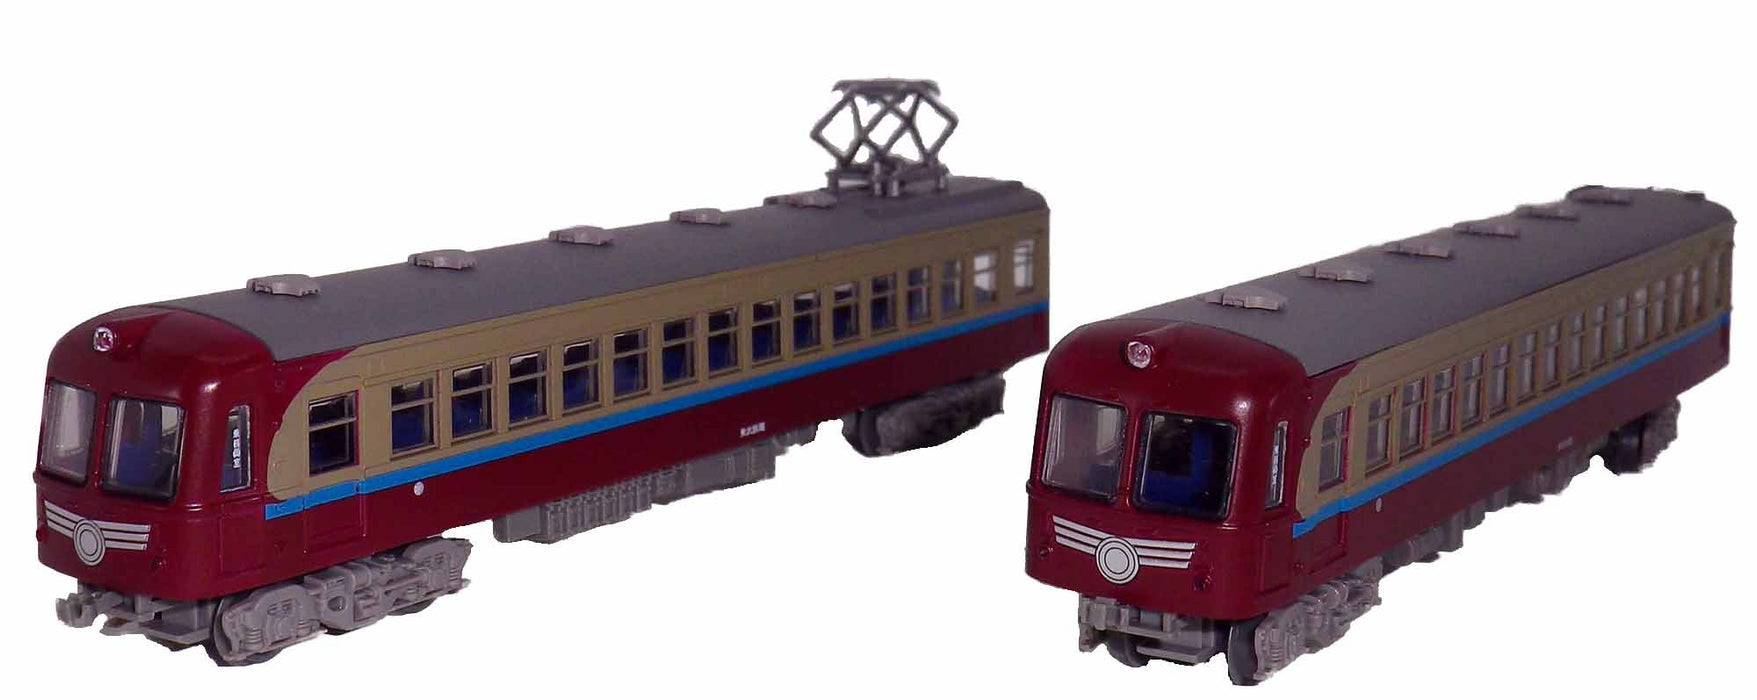 Tomytec Tobu Railway 5700 Series B Set - Blue Belt Car Collection